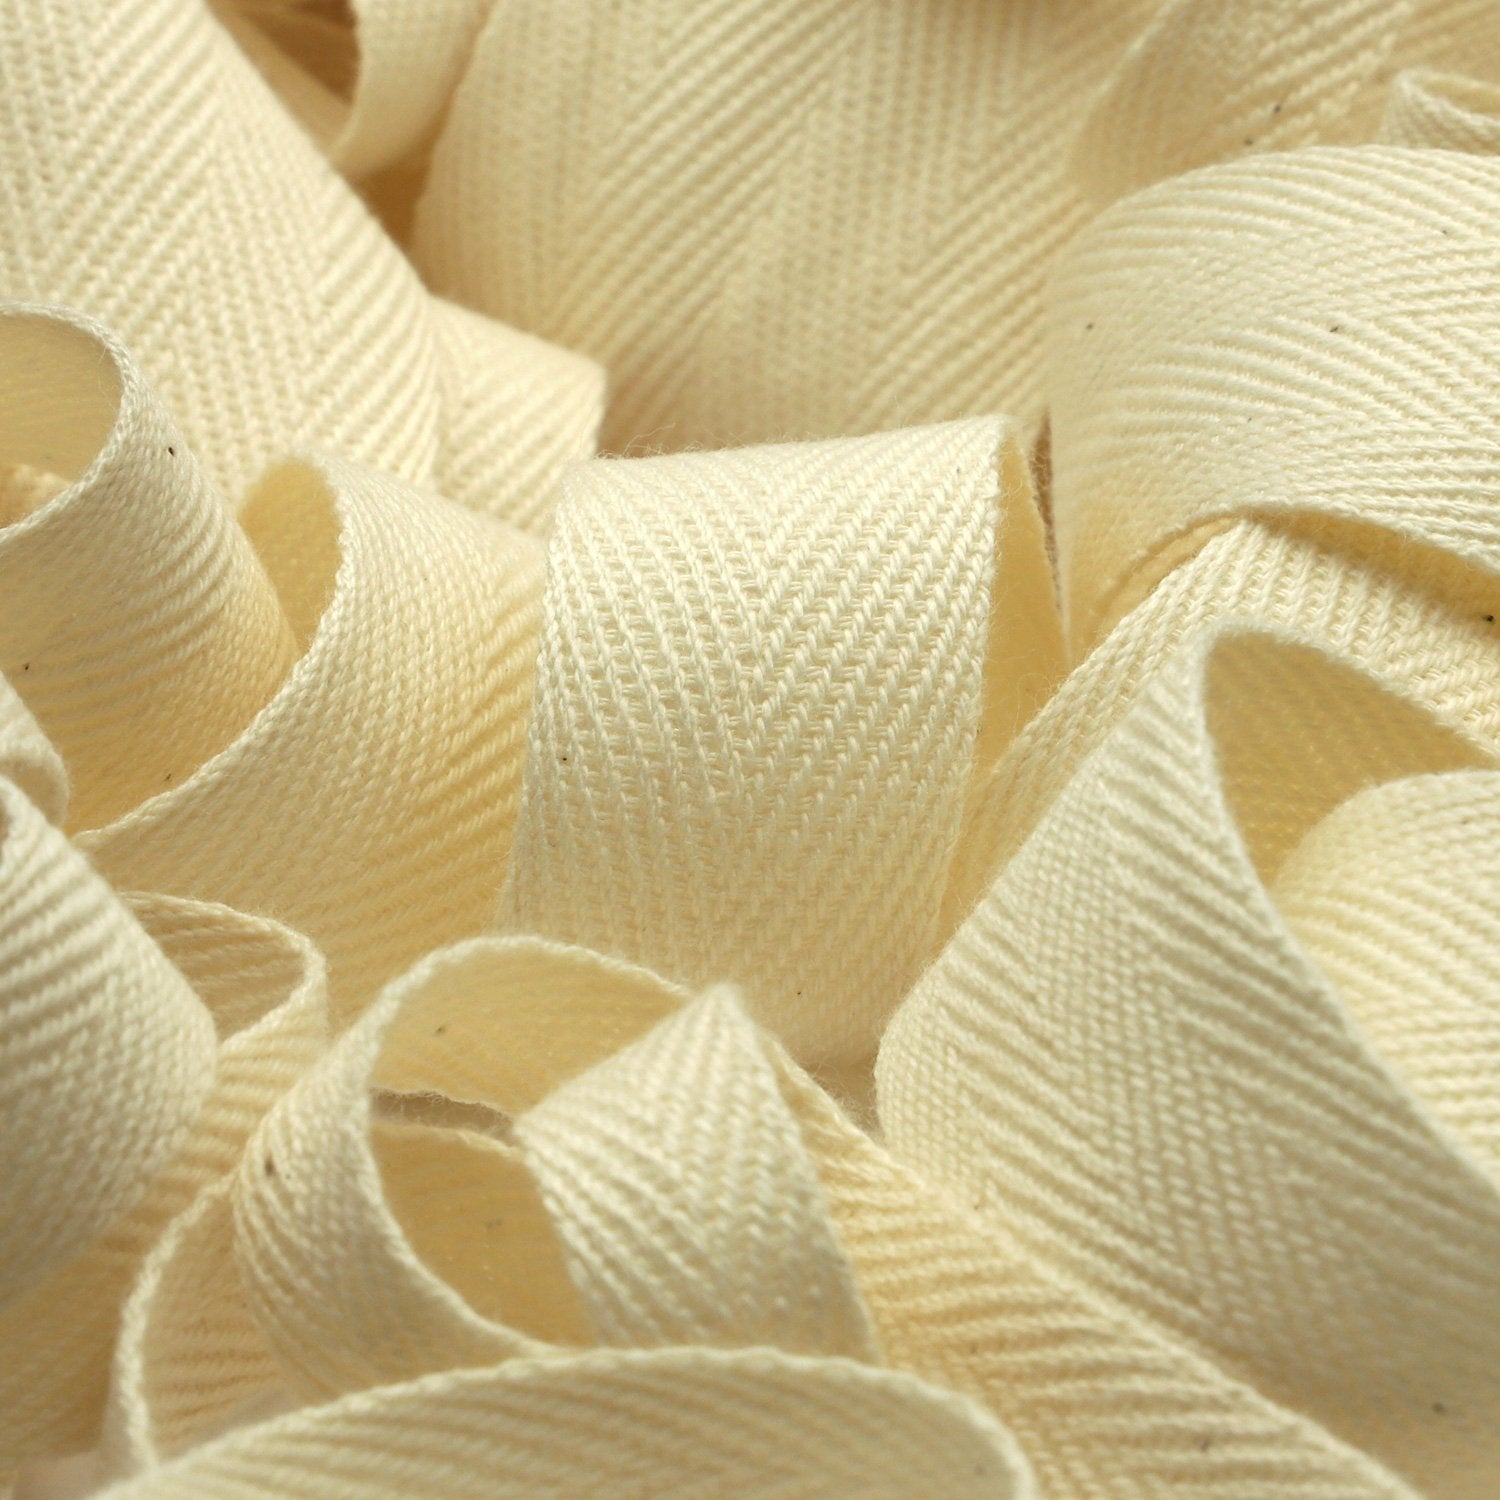 FUJIYAMA RIBBON [Wholesale] Organic Cotton Herringbone Ribbon 20mm Ecru 30 Meters Roll